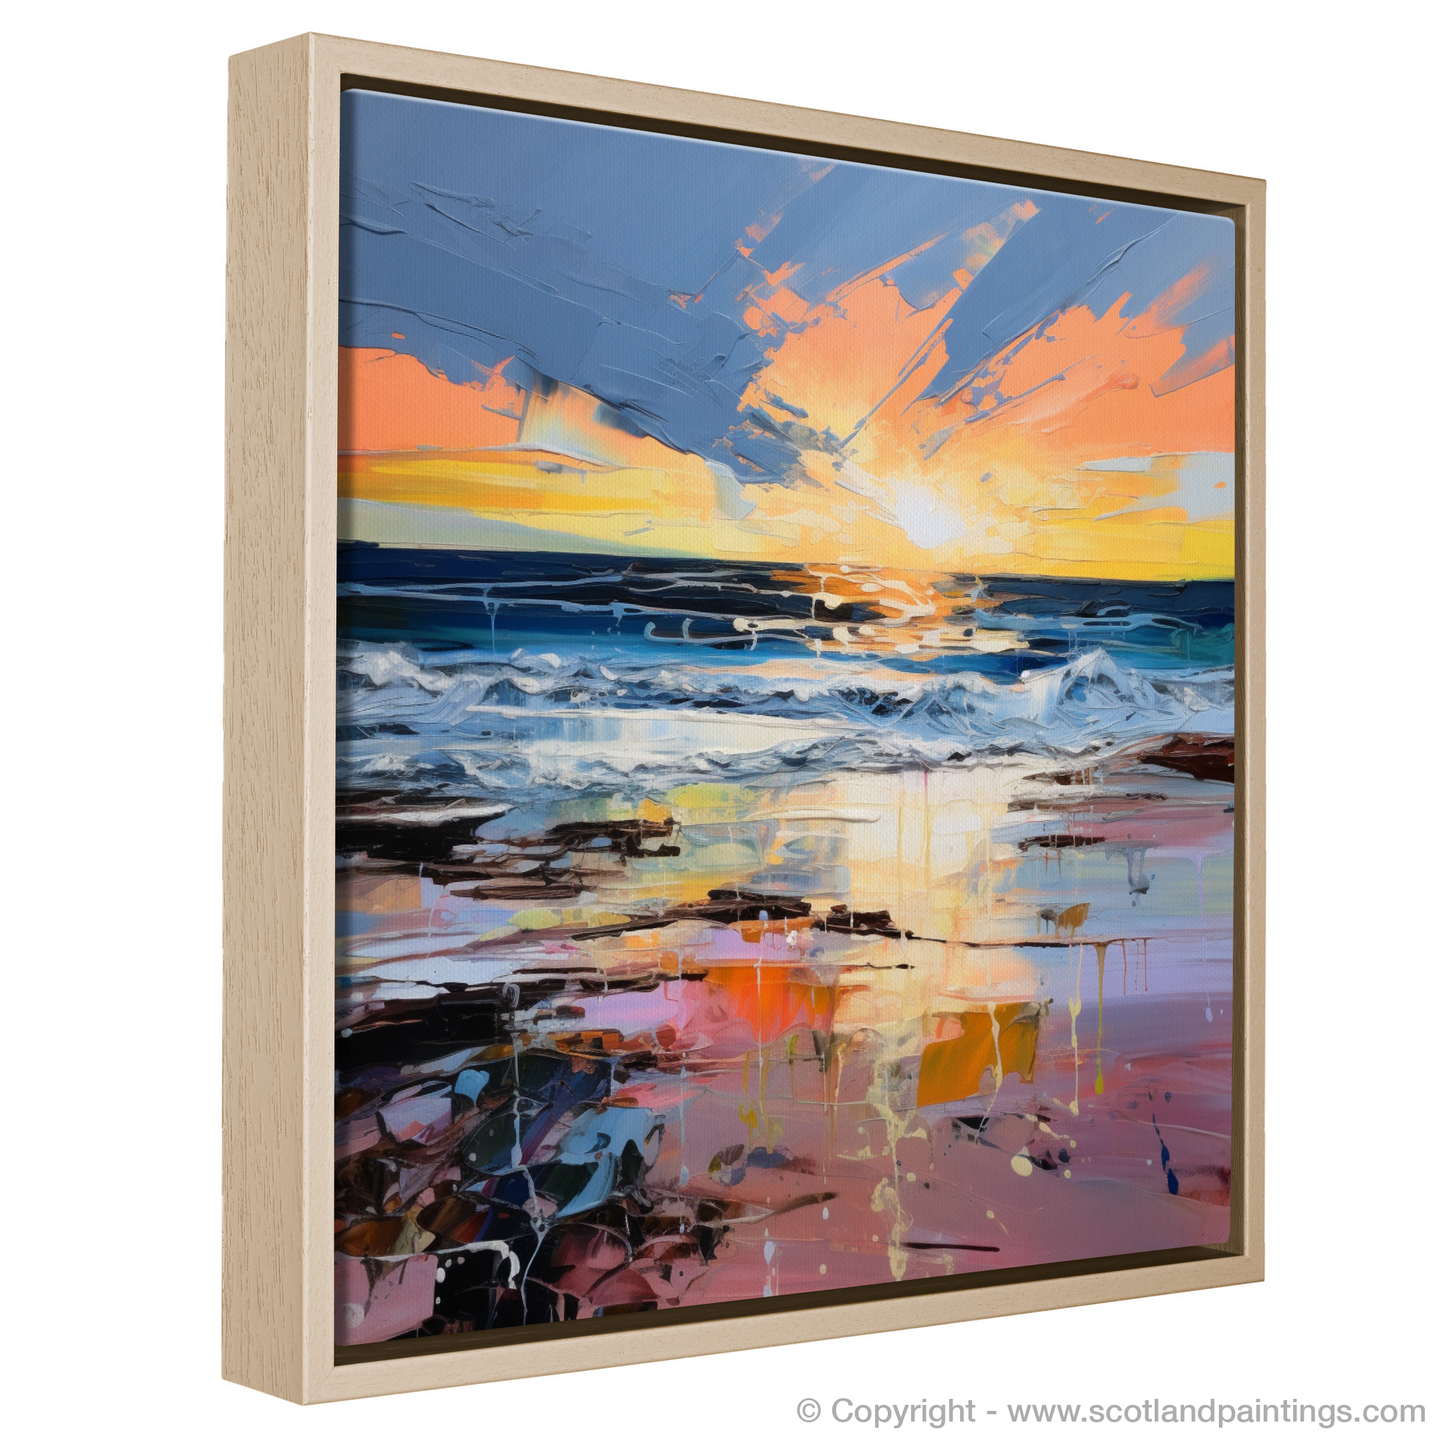 Painting and Art Print of Gullane Beach at sunset entitled "Sunset Serenade at Gullane Beach".